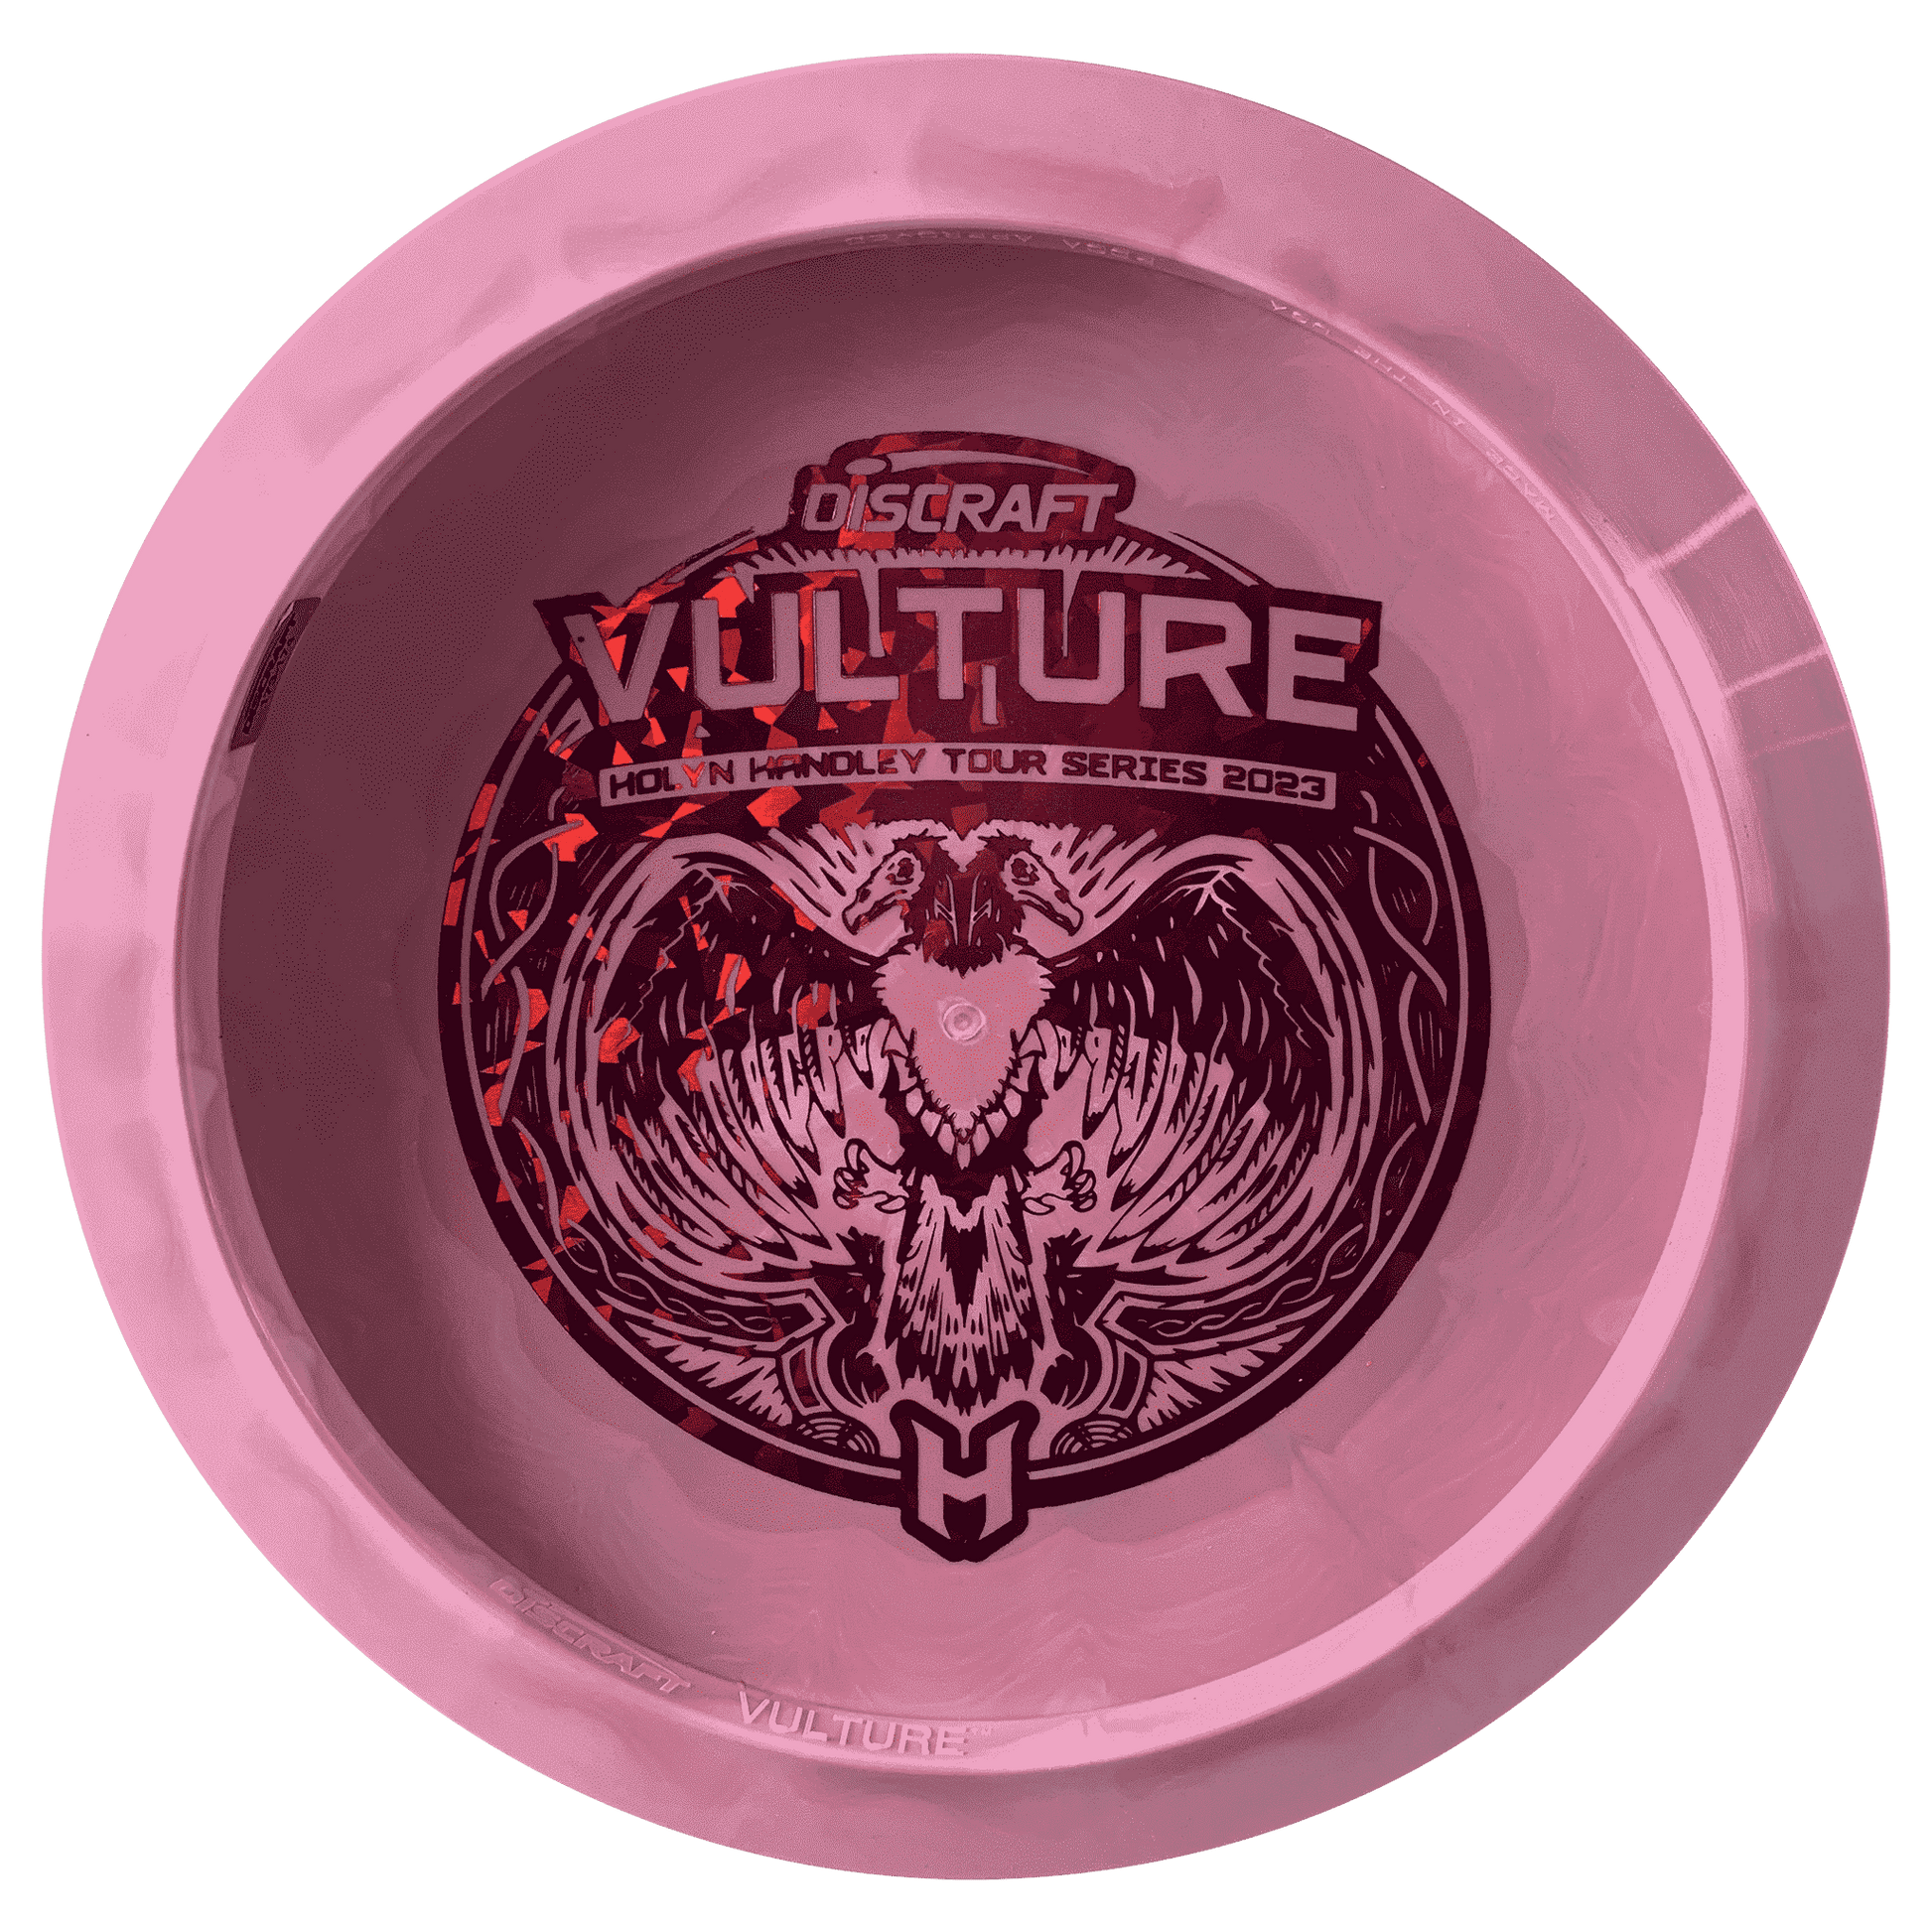 ESP Vulture - Holyn Handley Tour Series 2023 Bottom Stamp Disc Discraft multi / pink 173 